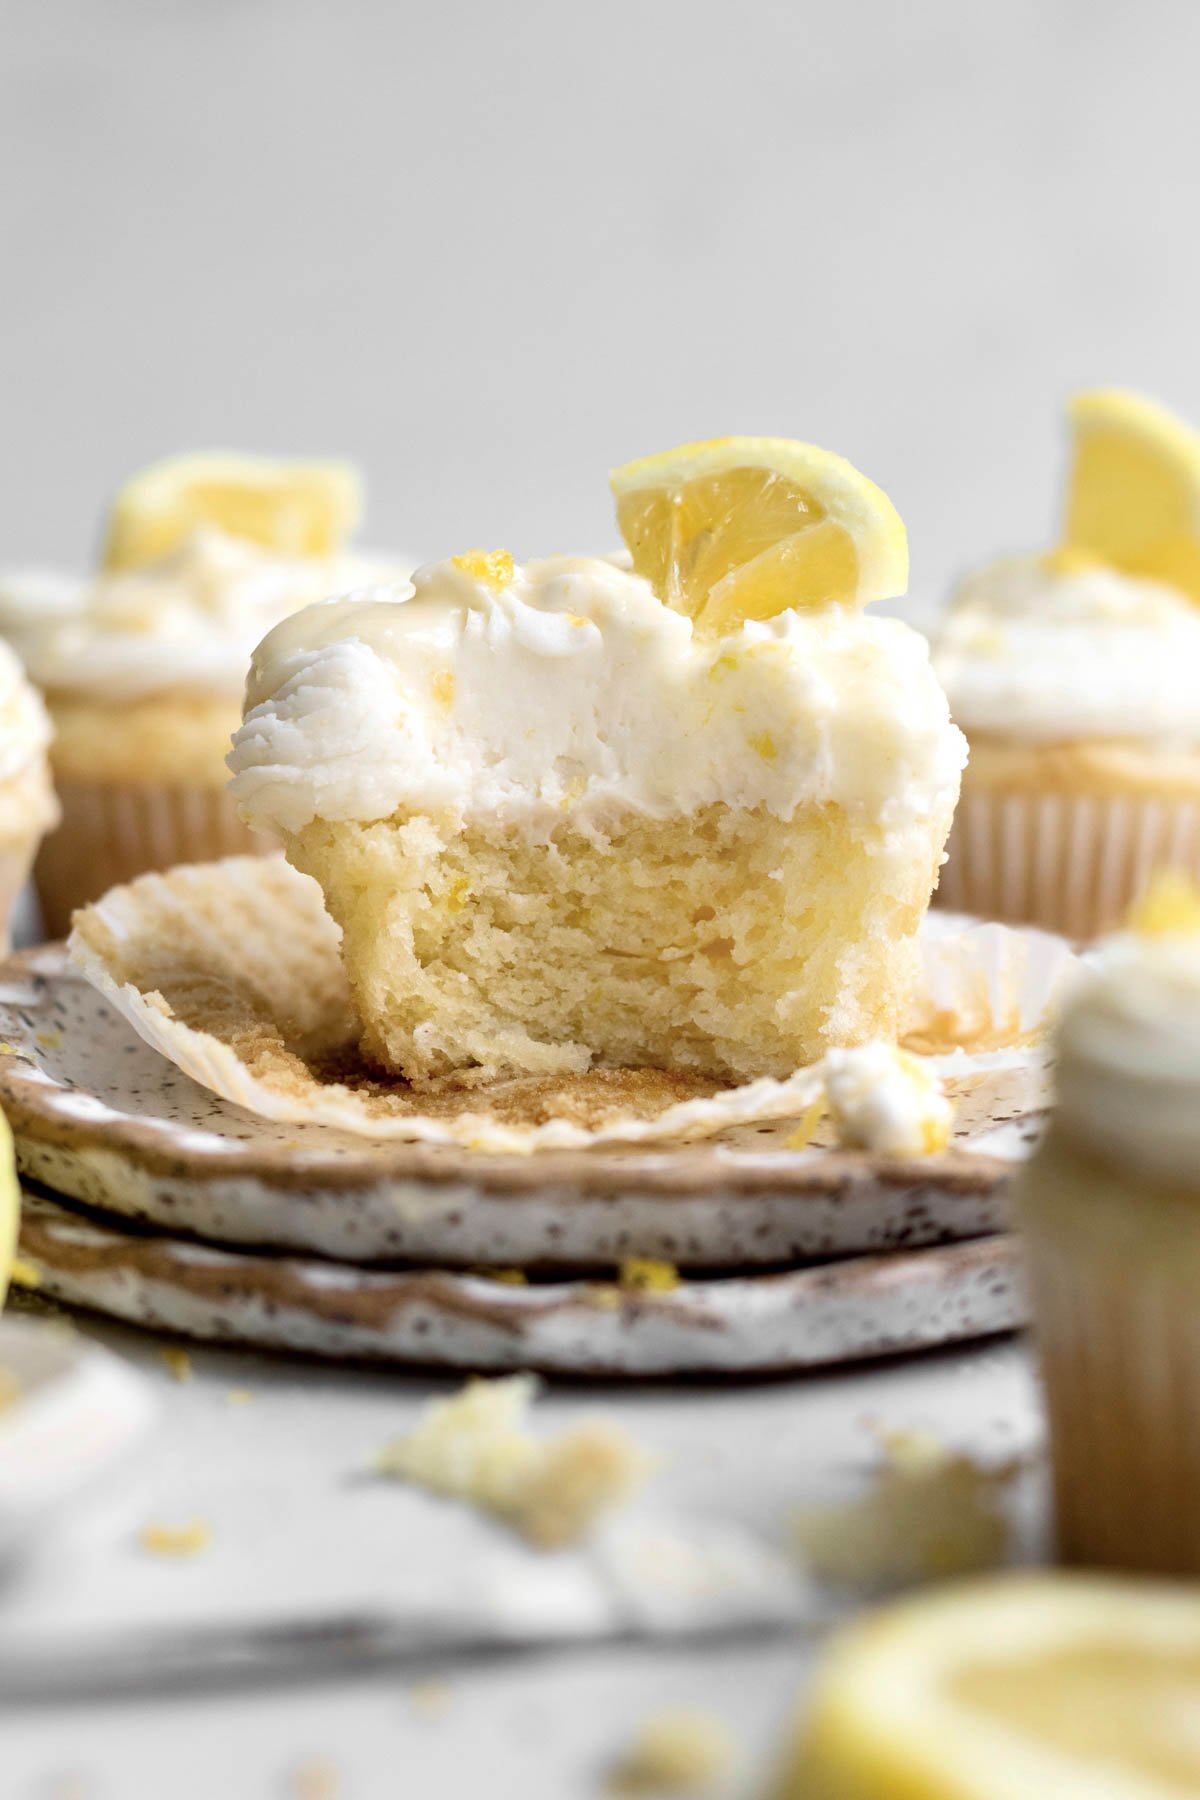 A lemon drizzle cupcake with a bite taken reveals its soft lemony insides.